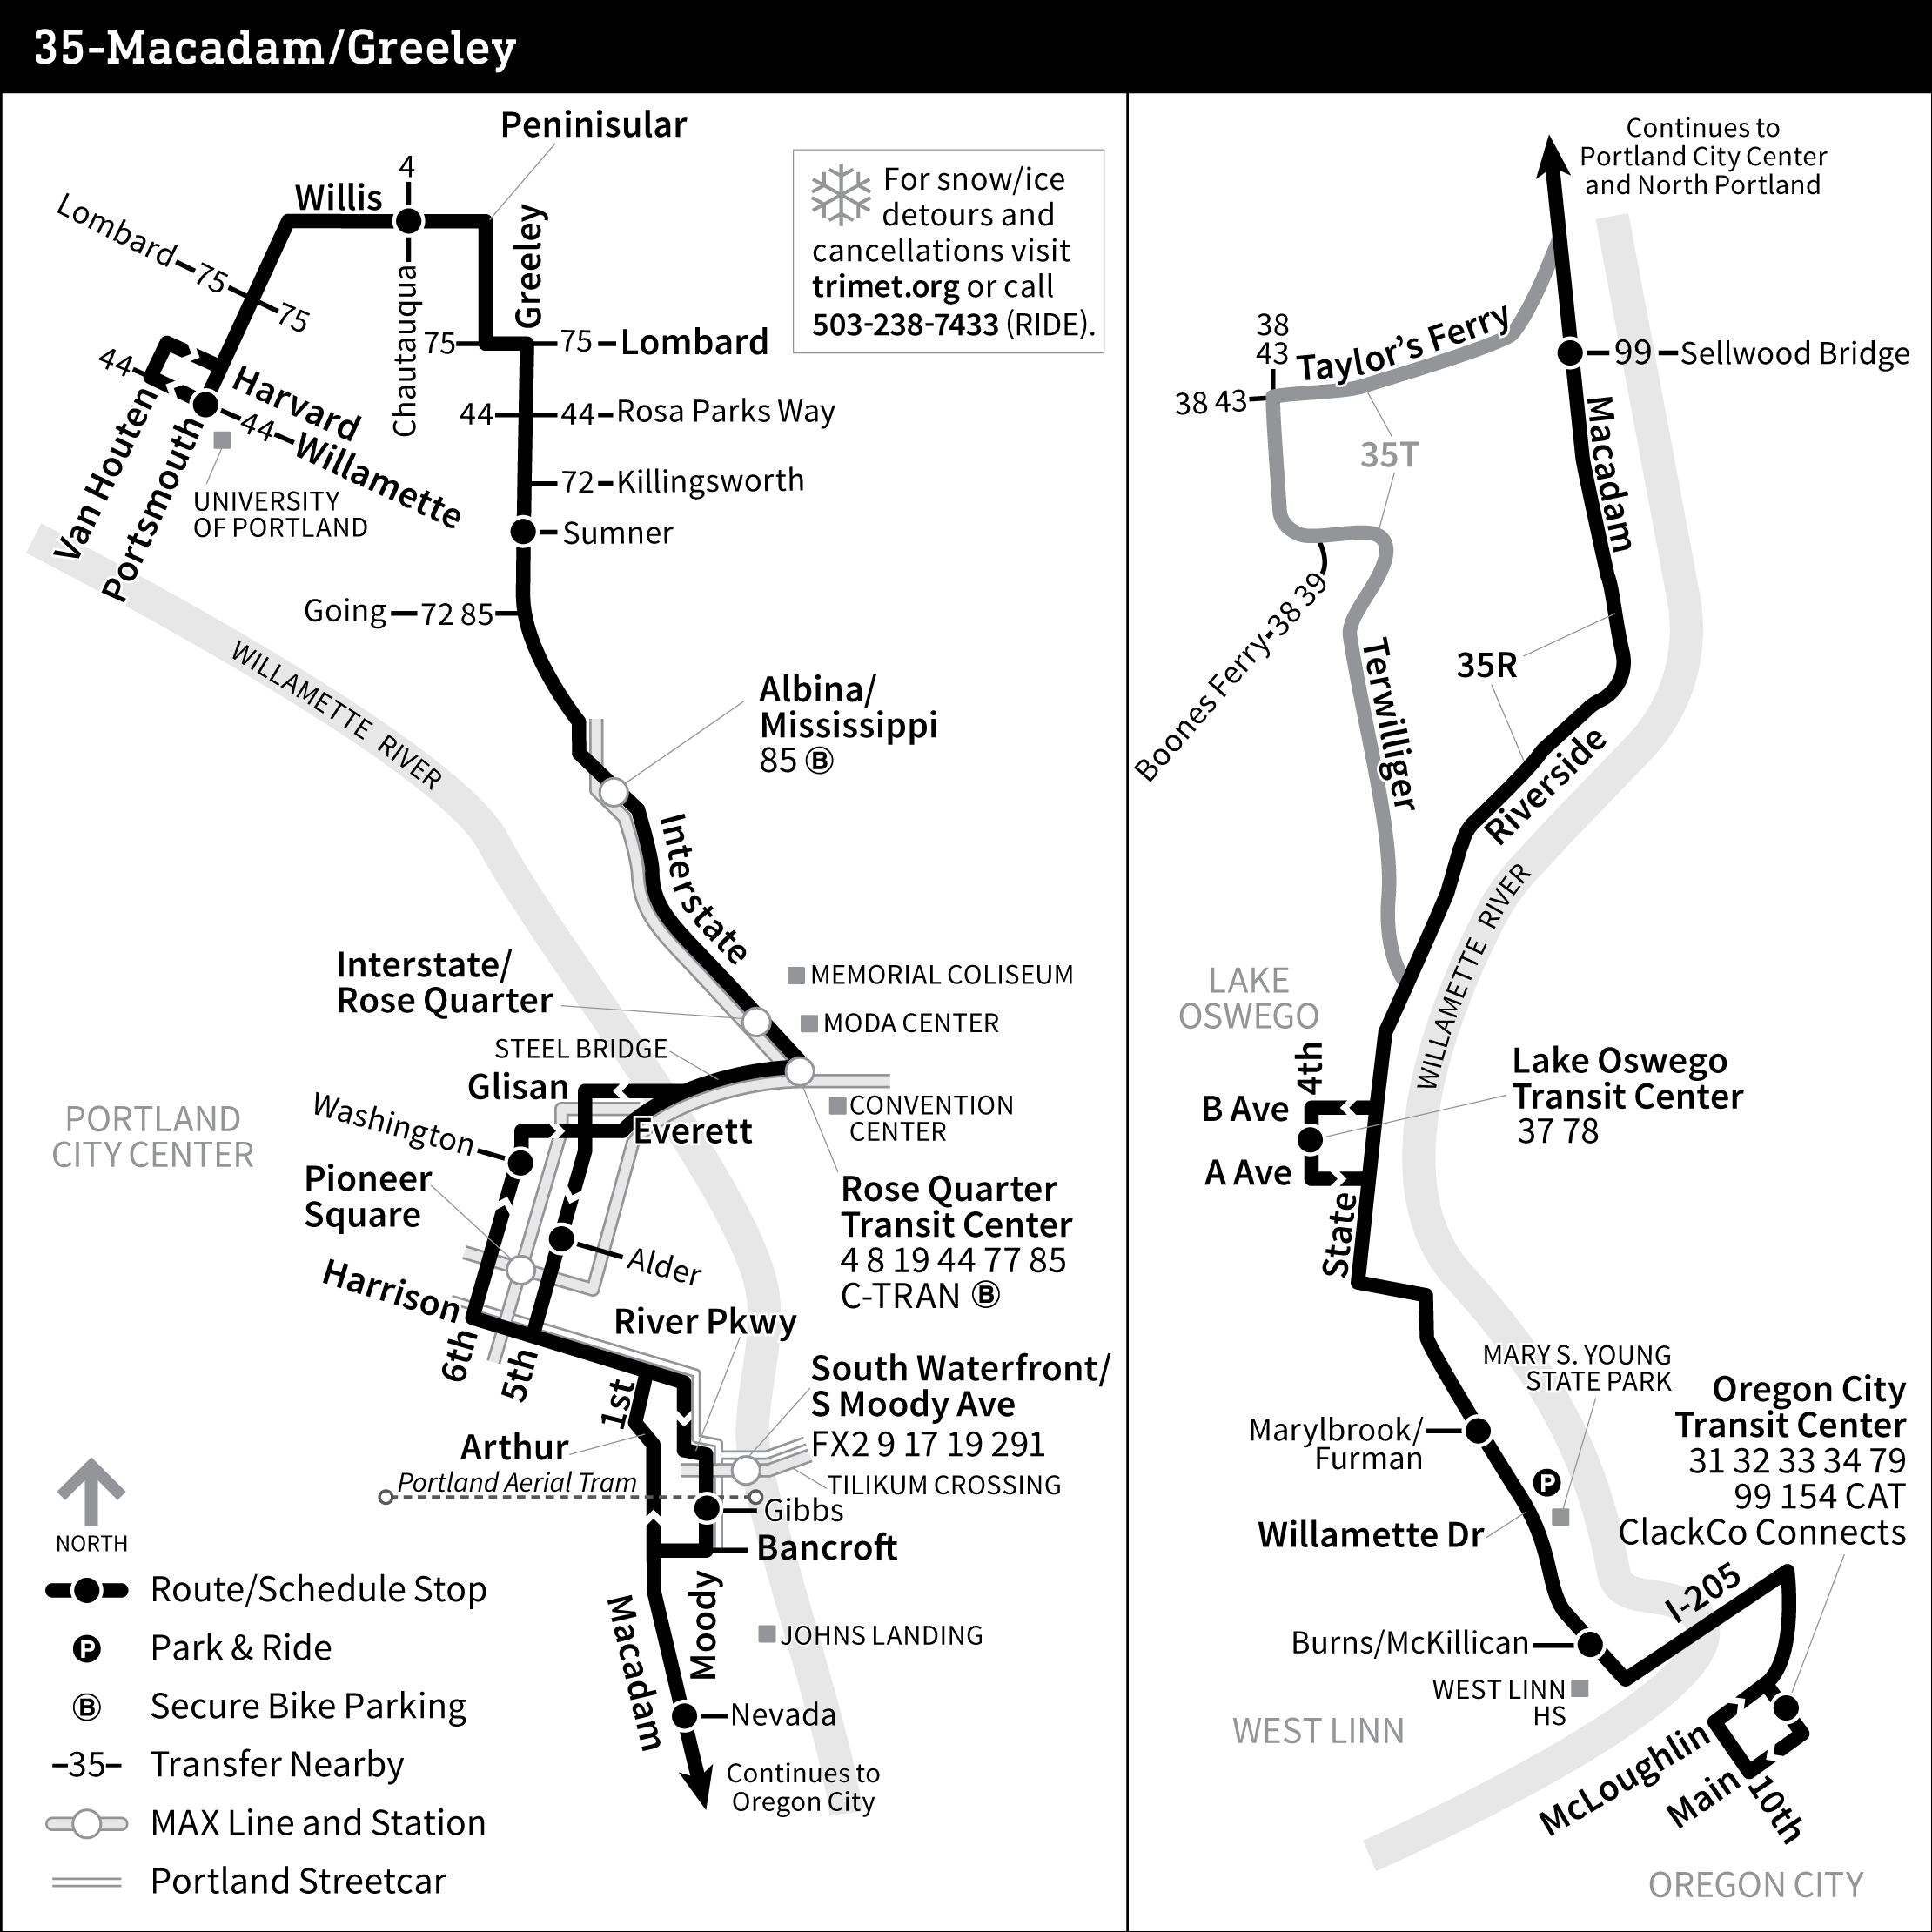 Bus Line 35 route map